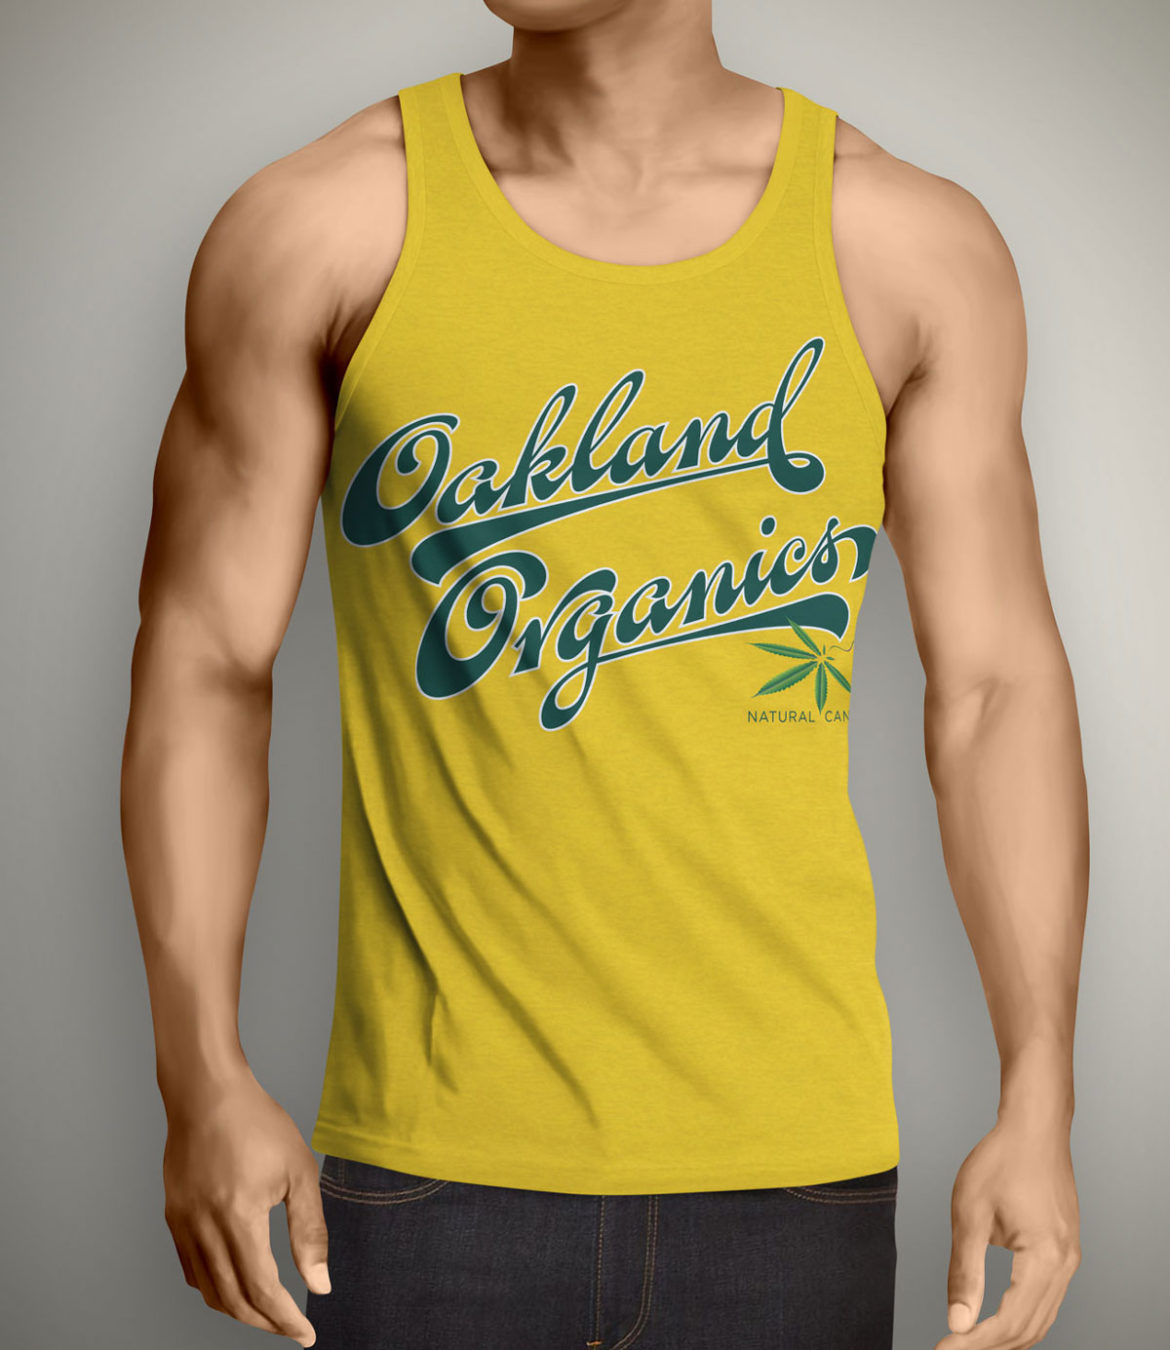 Oakland Organics tank top design